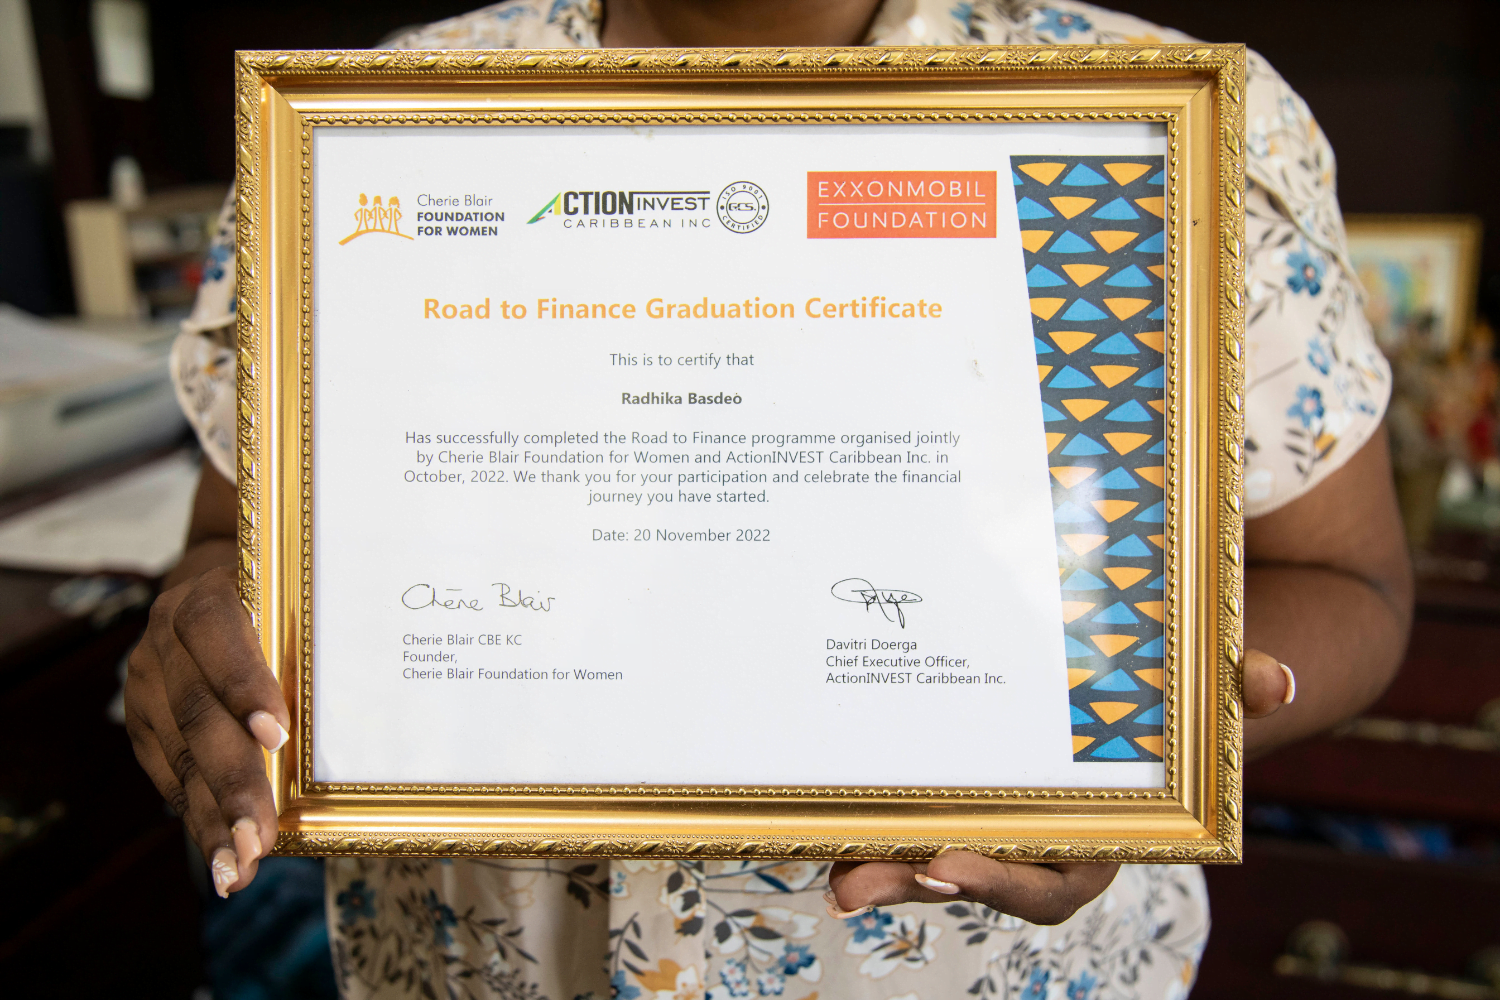 Radhika Basdeo's Road to Finance certificate.